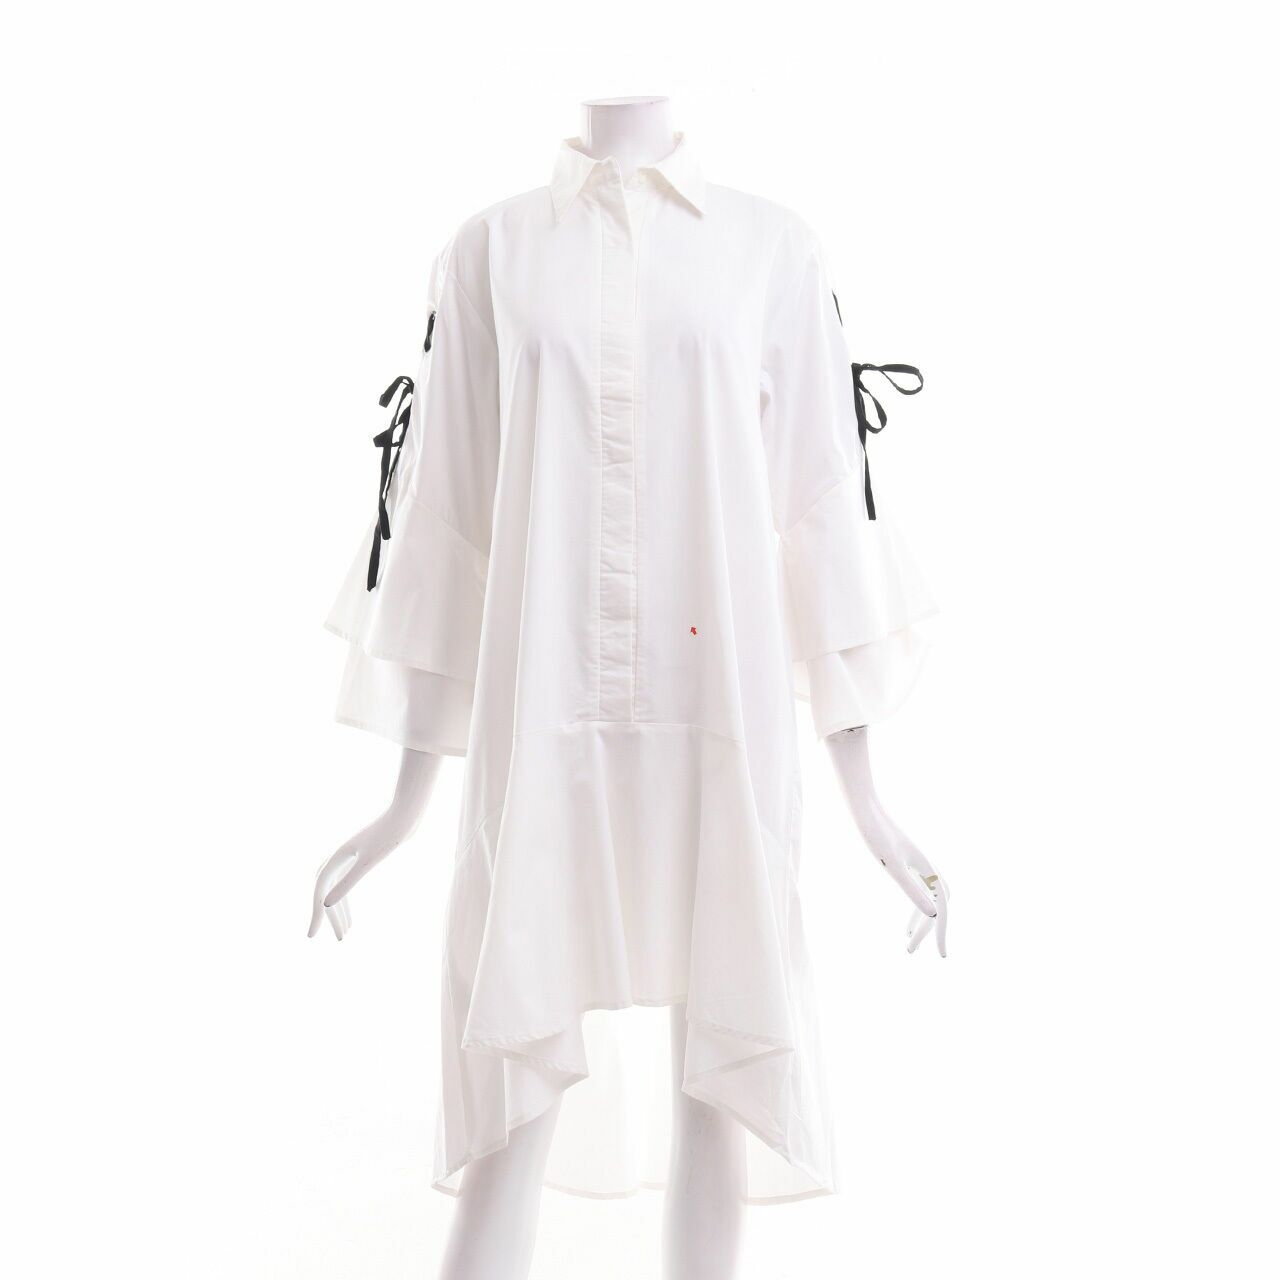 Schoncouture White Tunic Shirt	